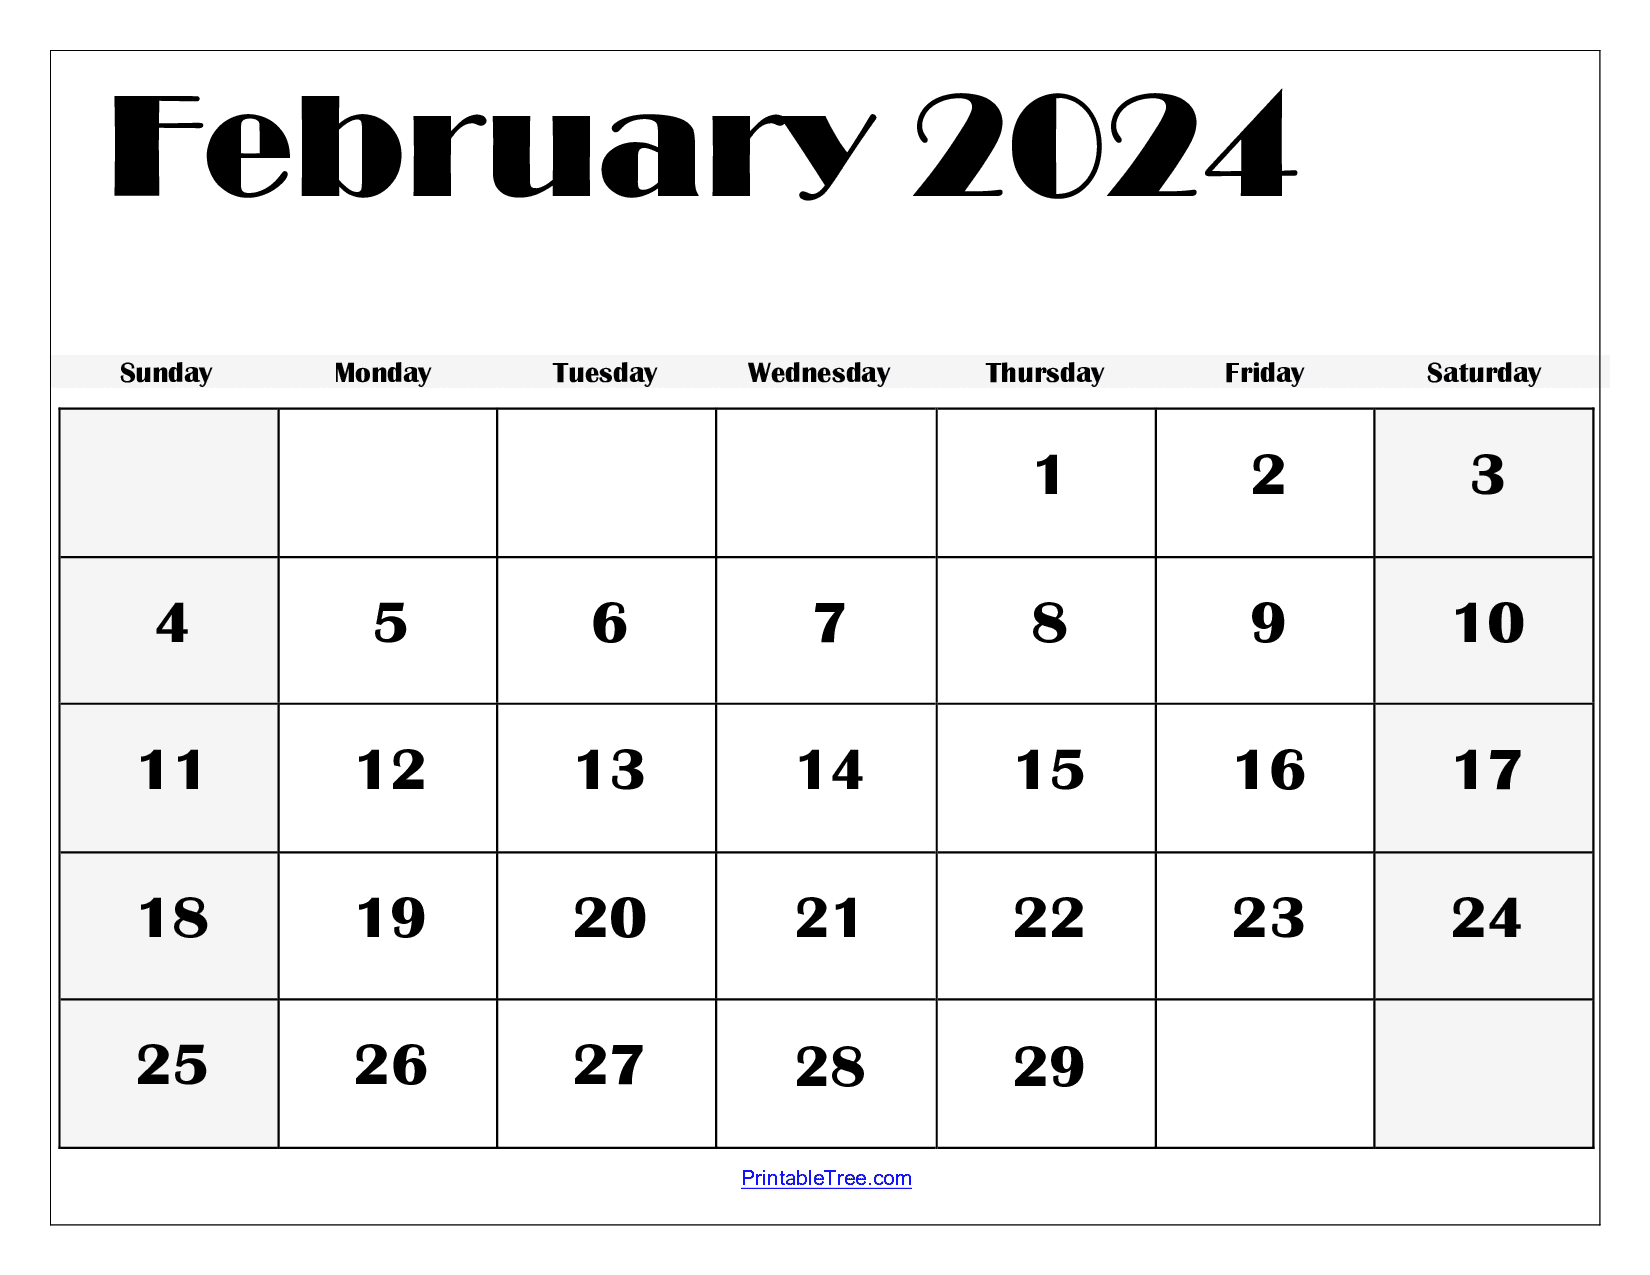 February 2024 Calendar Printable Pdf Template With Holidays for February 2024 Printable Calendar Free